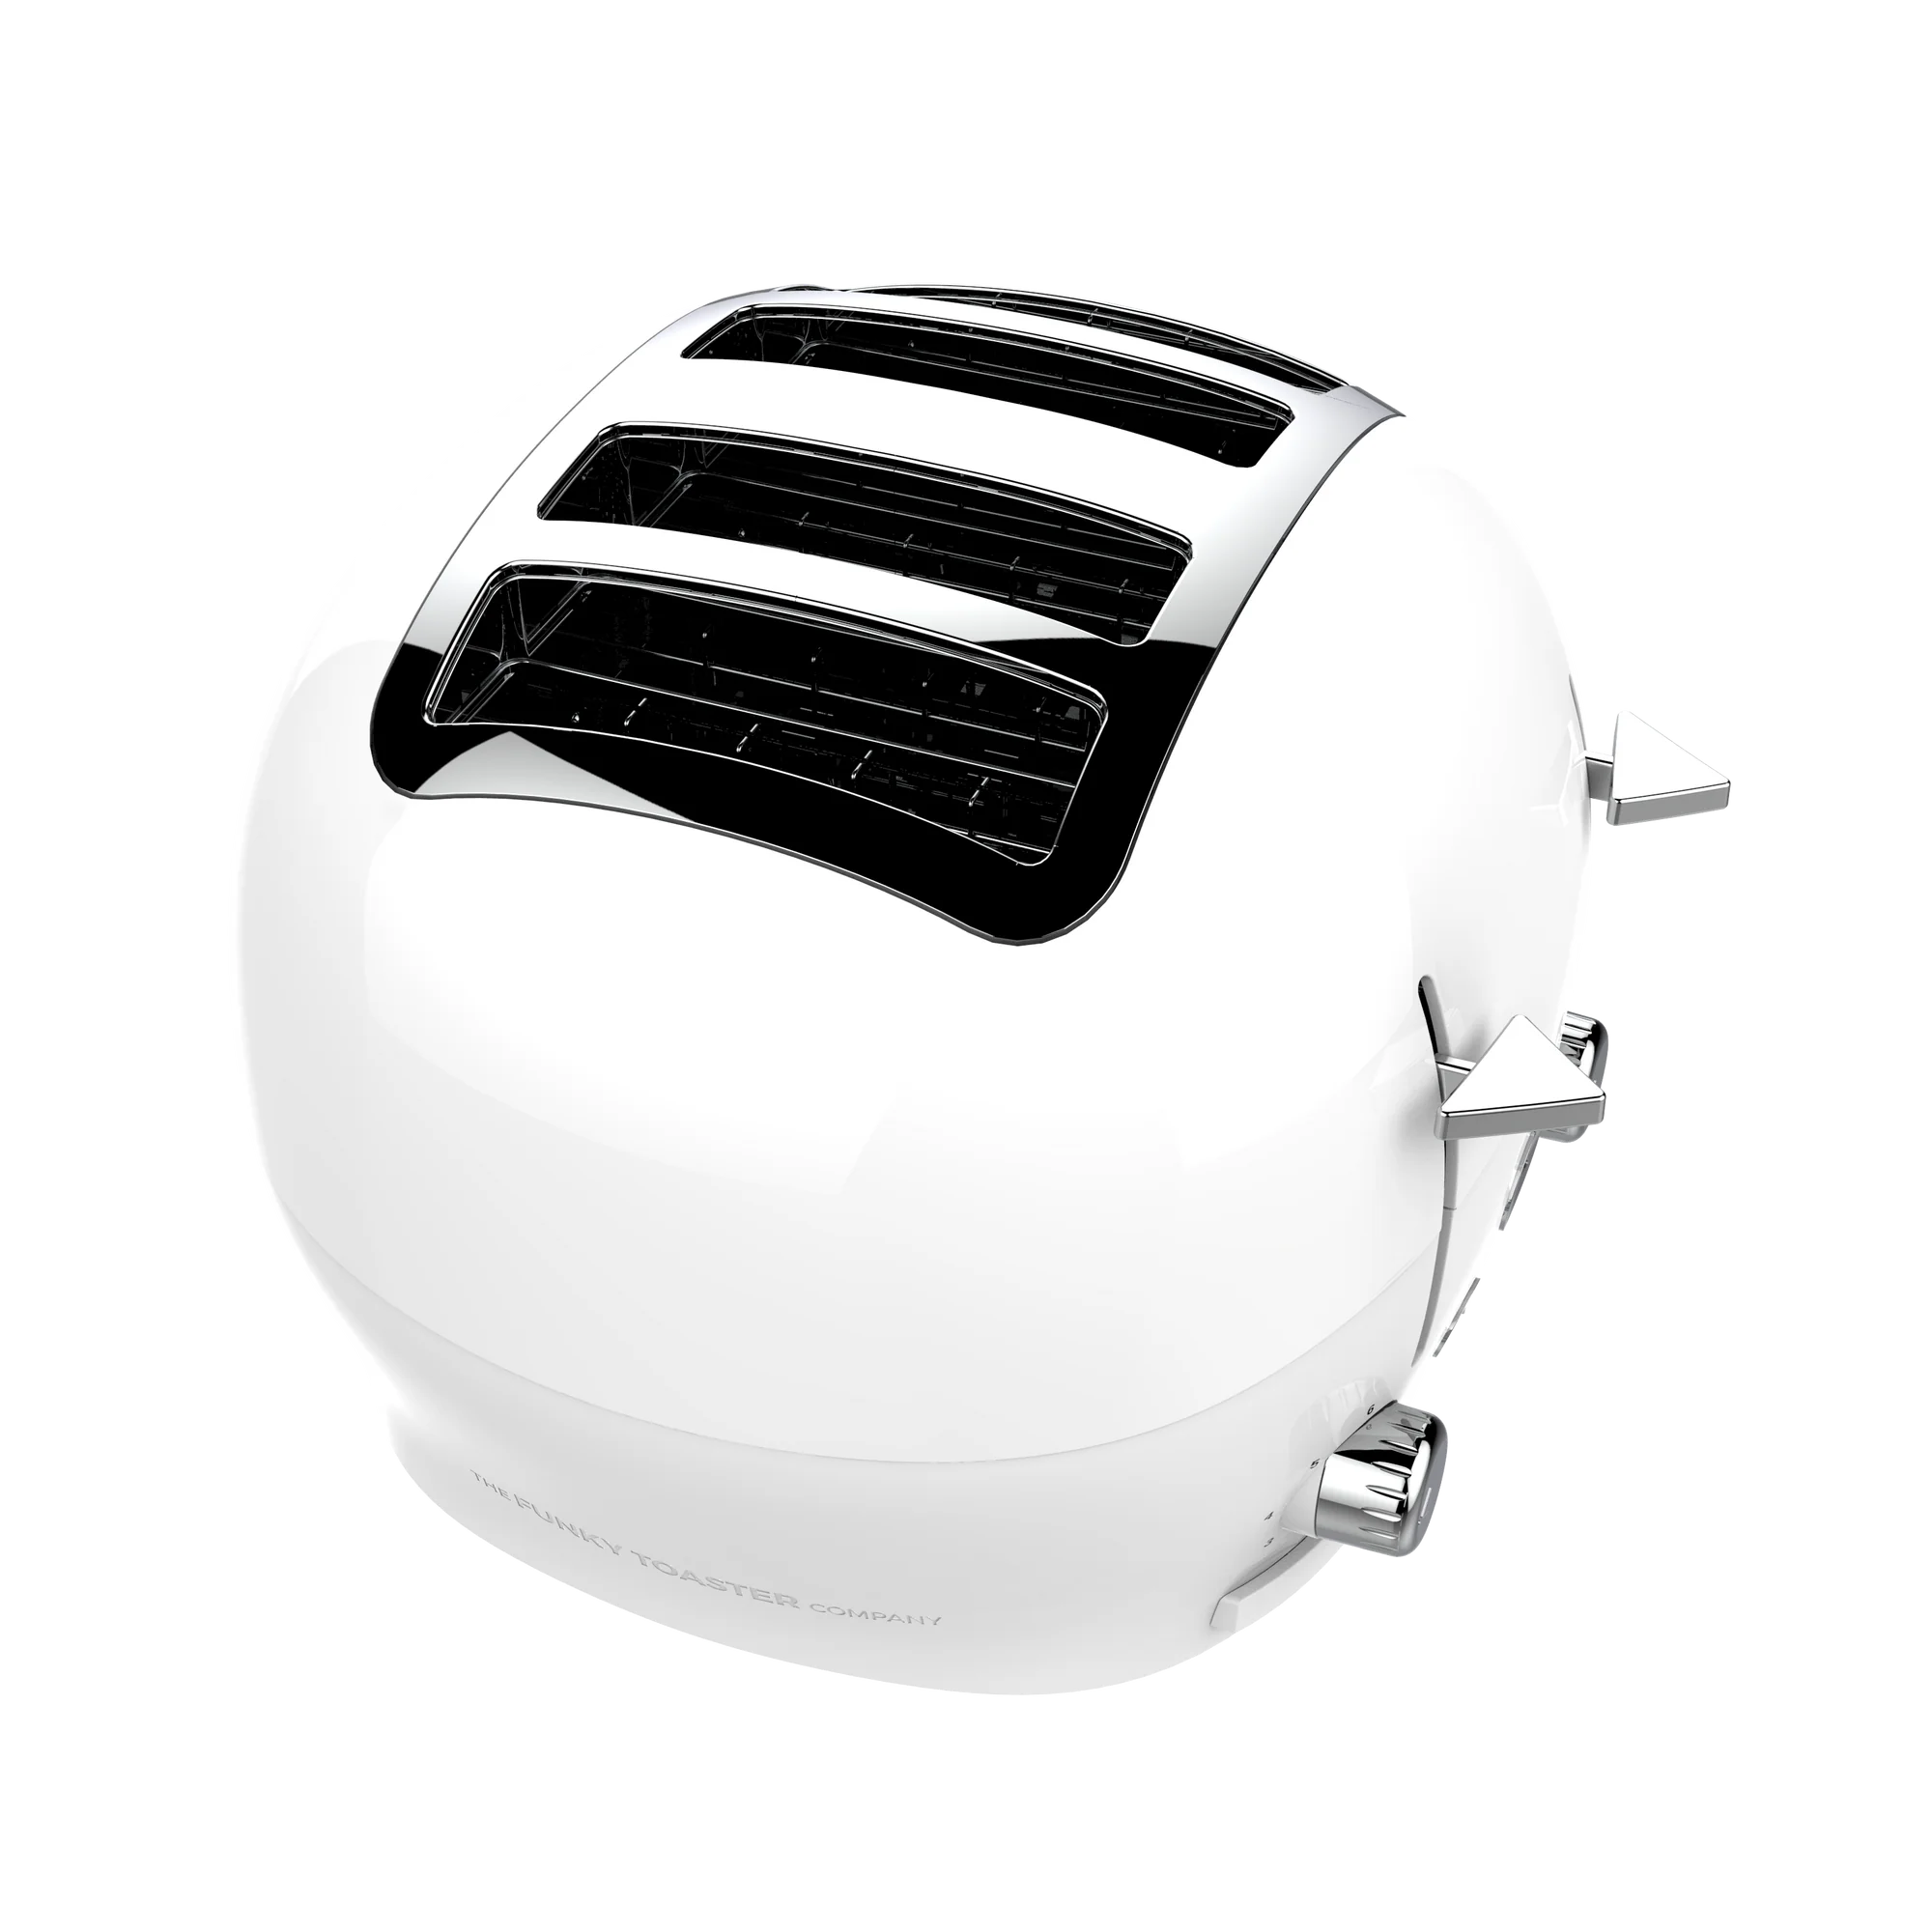 4-Slice White Funky Toaster